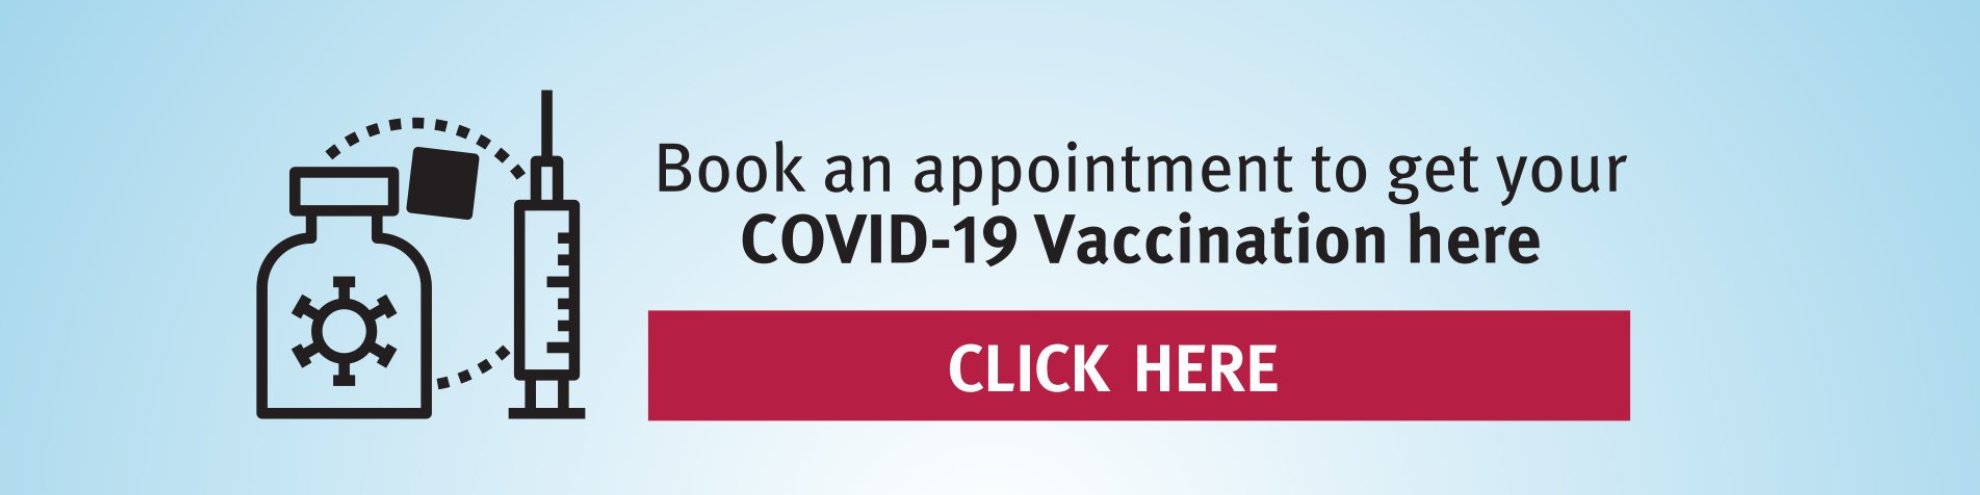 covid-19 vaccine at simcoe pharmacy